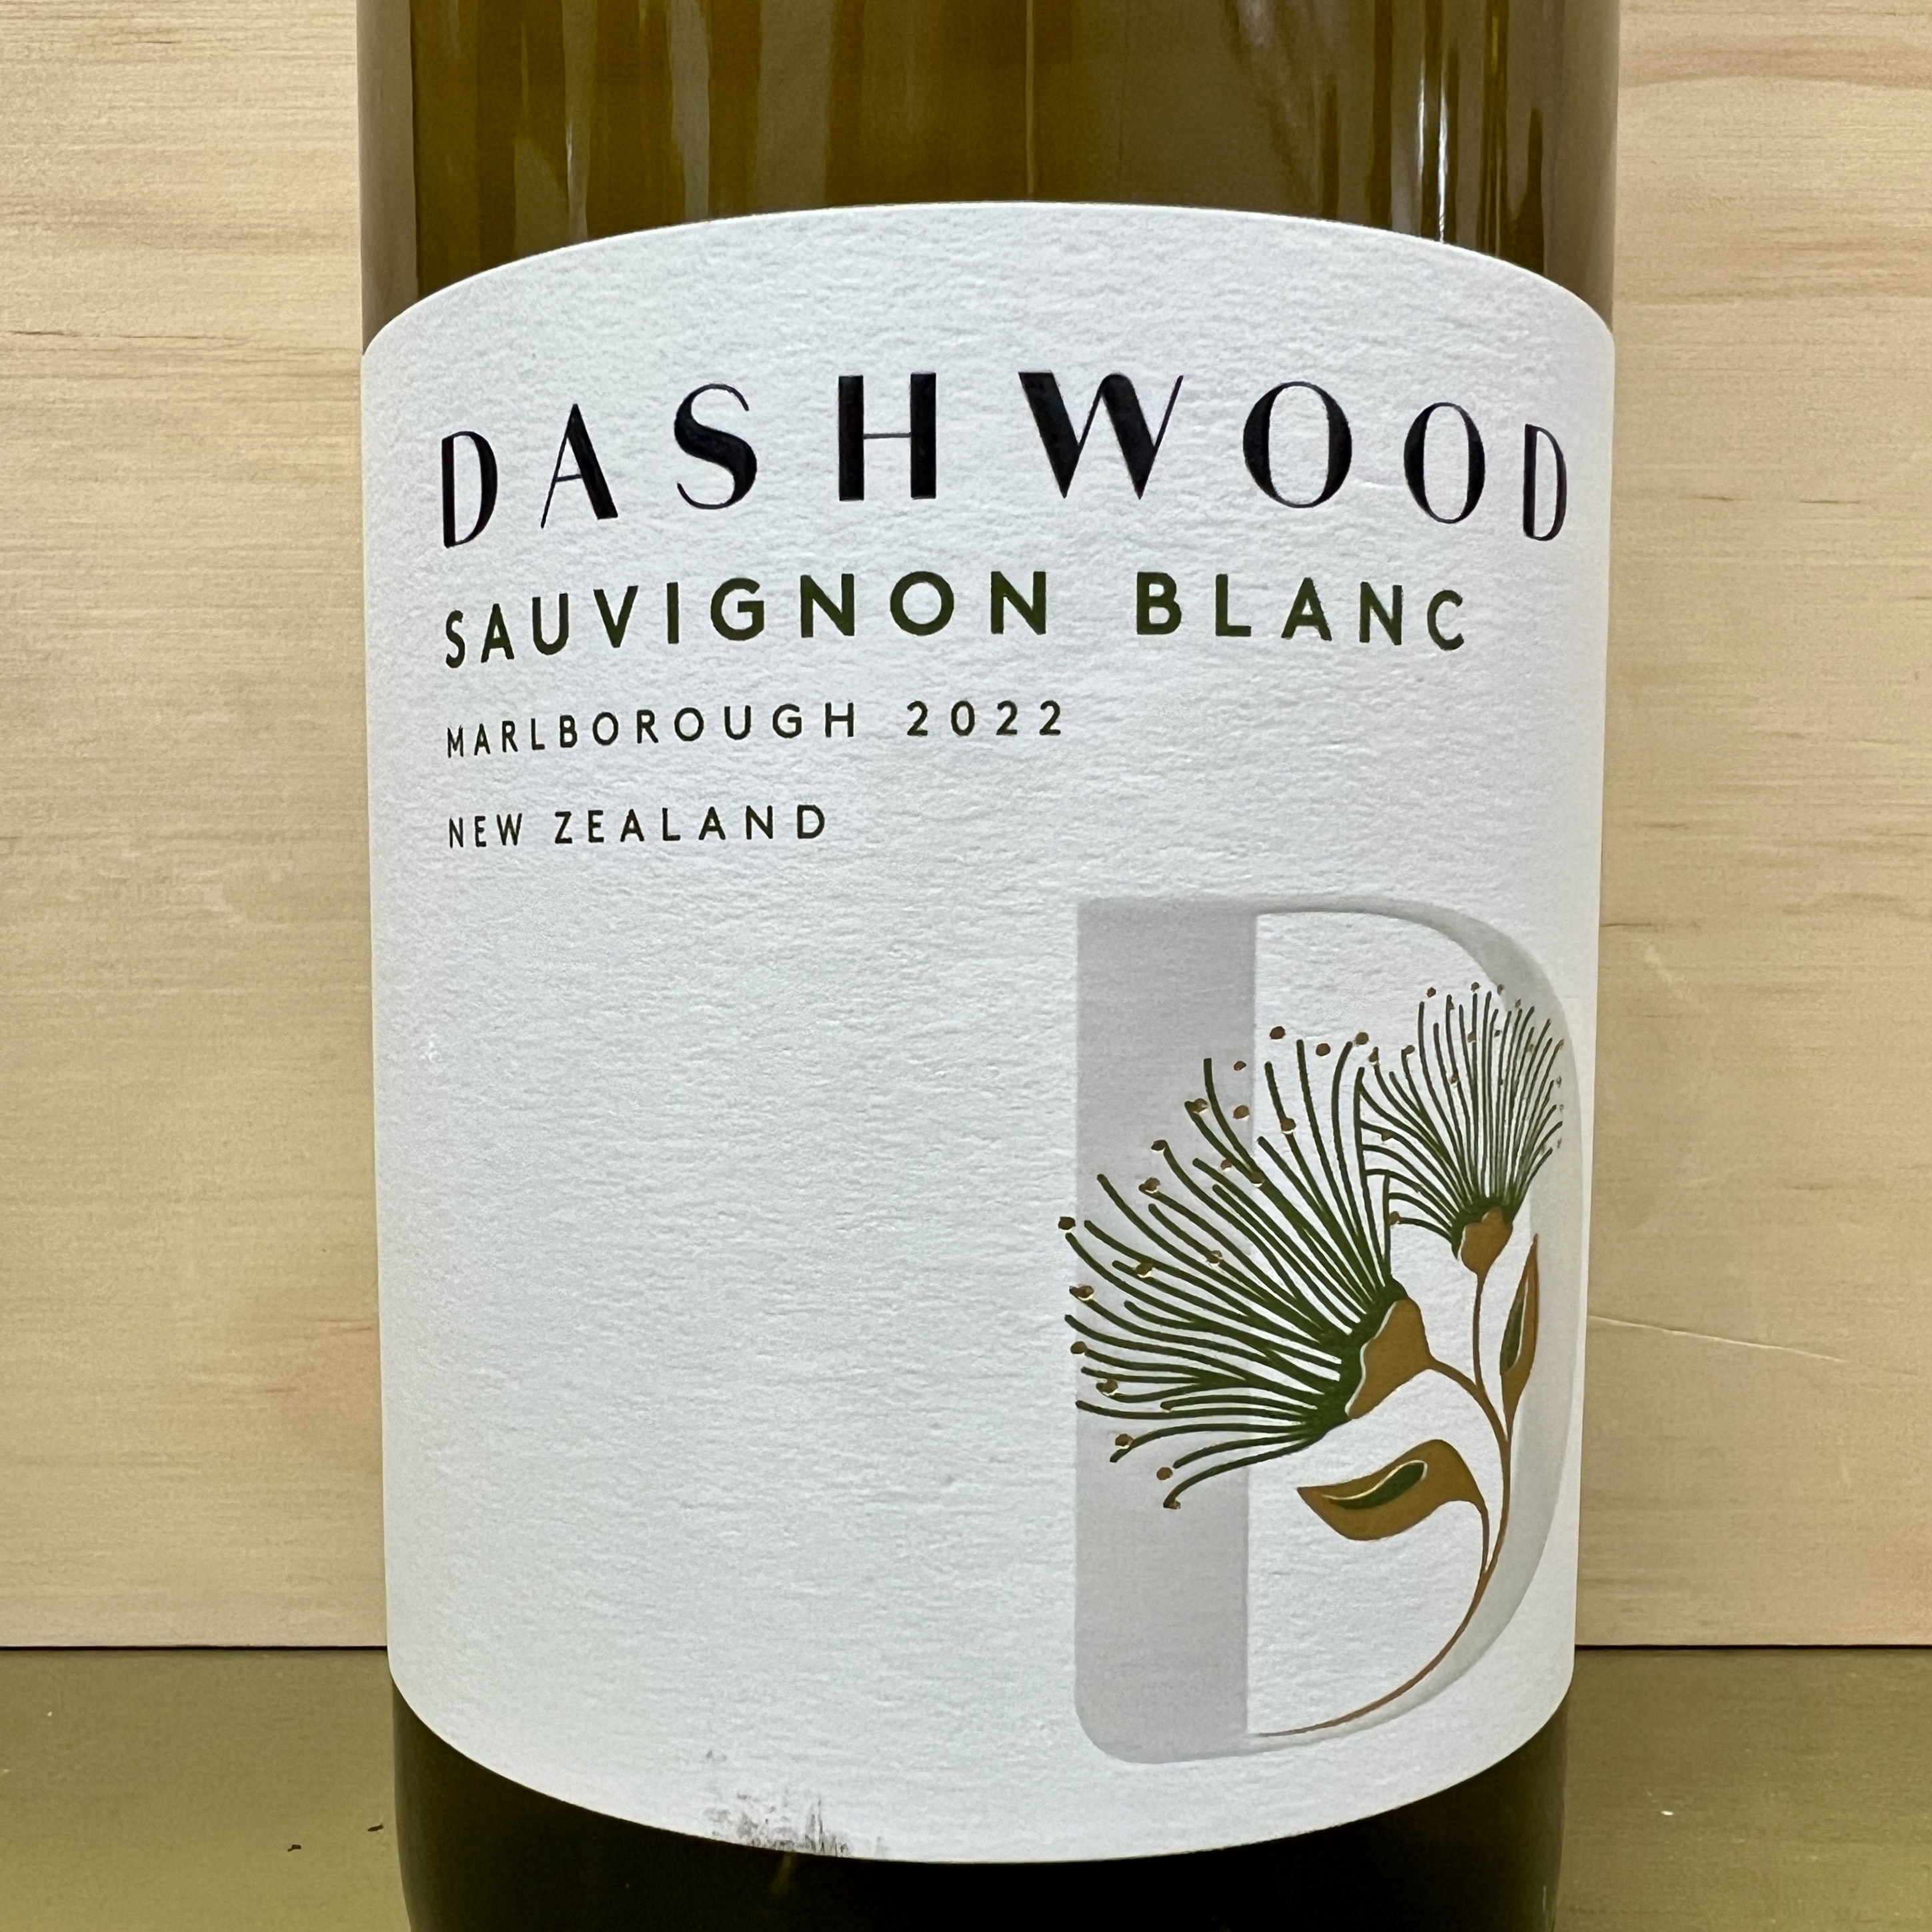 Dashwood Sauvignon Blanc Marlborough 2022